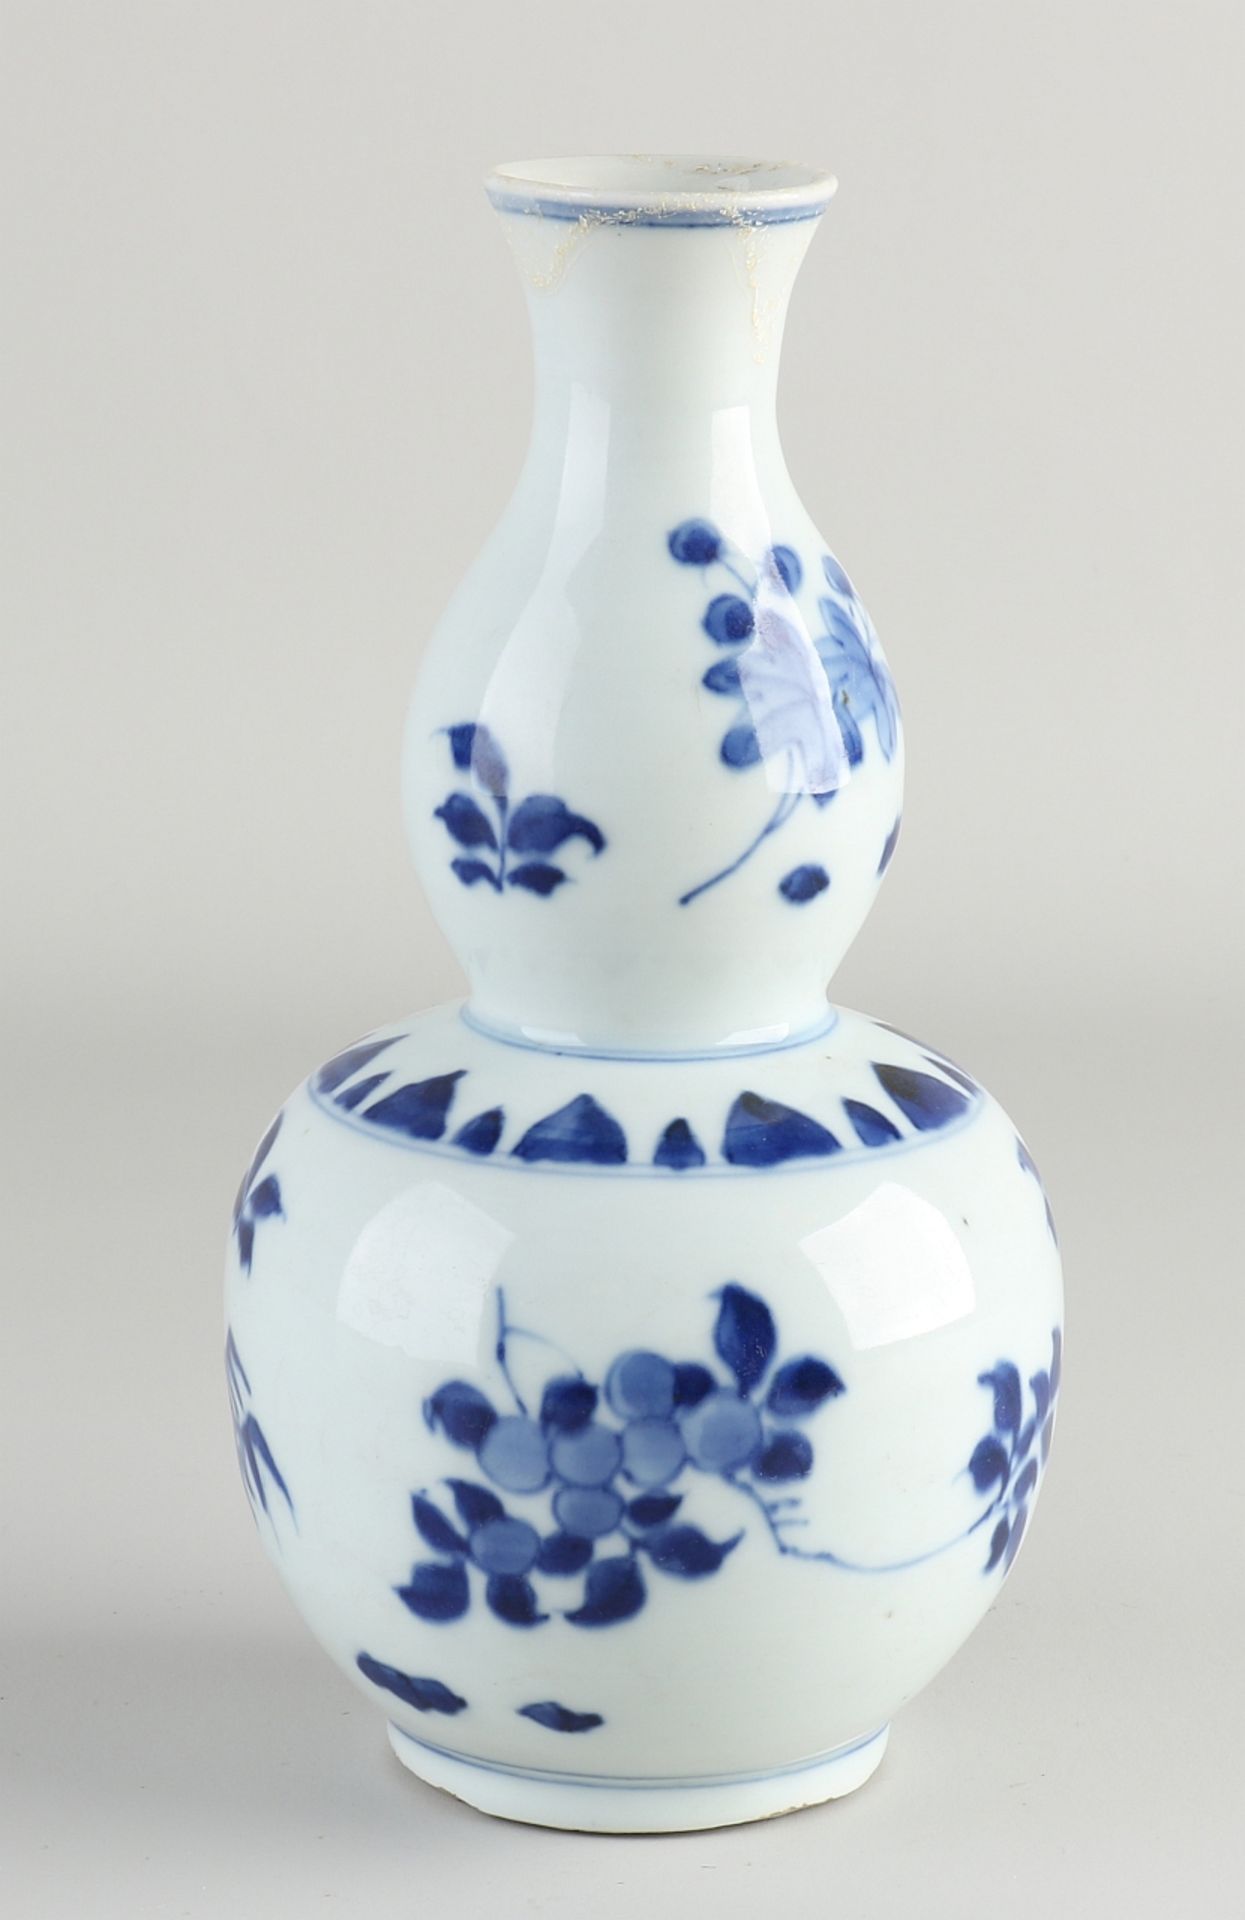 Chinese knob vase, H 20 cm. - Image 2 of 3